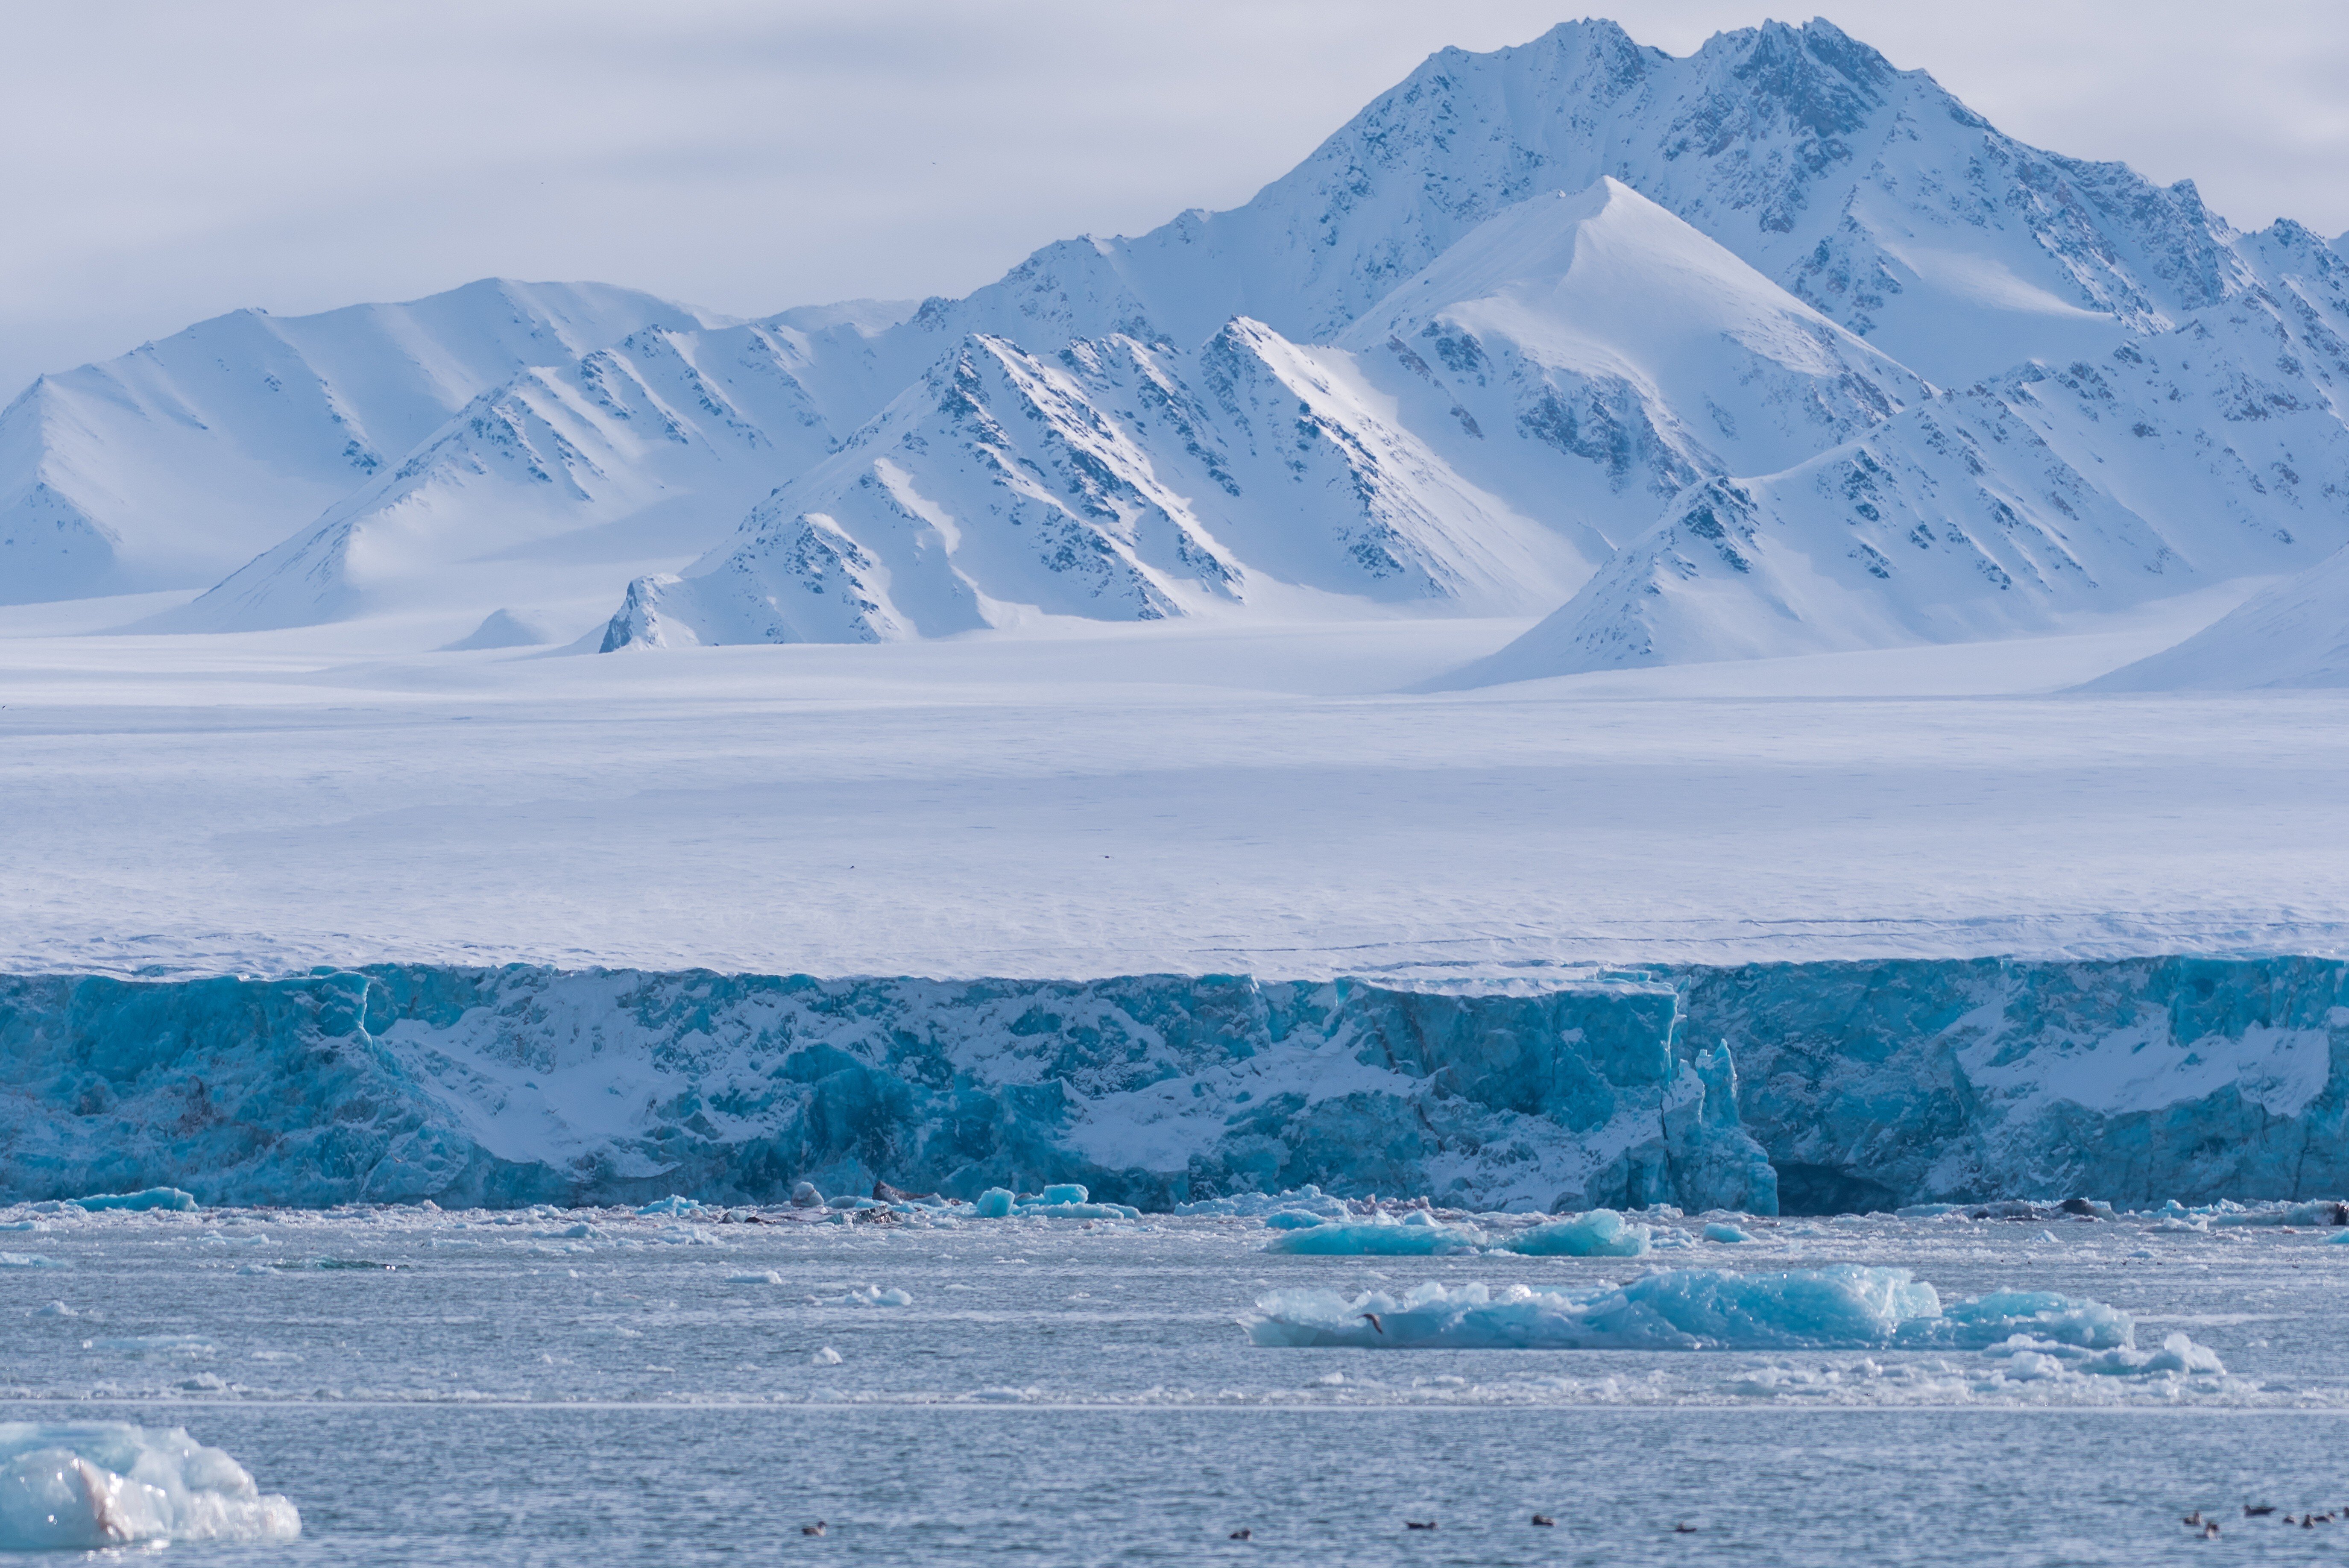 Хребты ледовитого океана. Морена ледника Шпицберген. Северный полюс Арктика. Арктика пейзаж. Льды Северного Ледовитого океана.